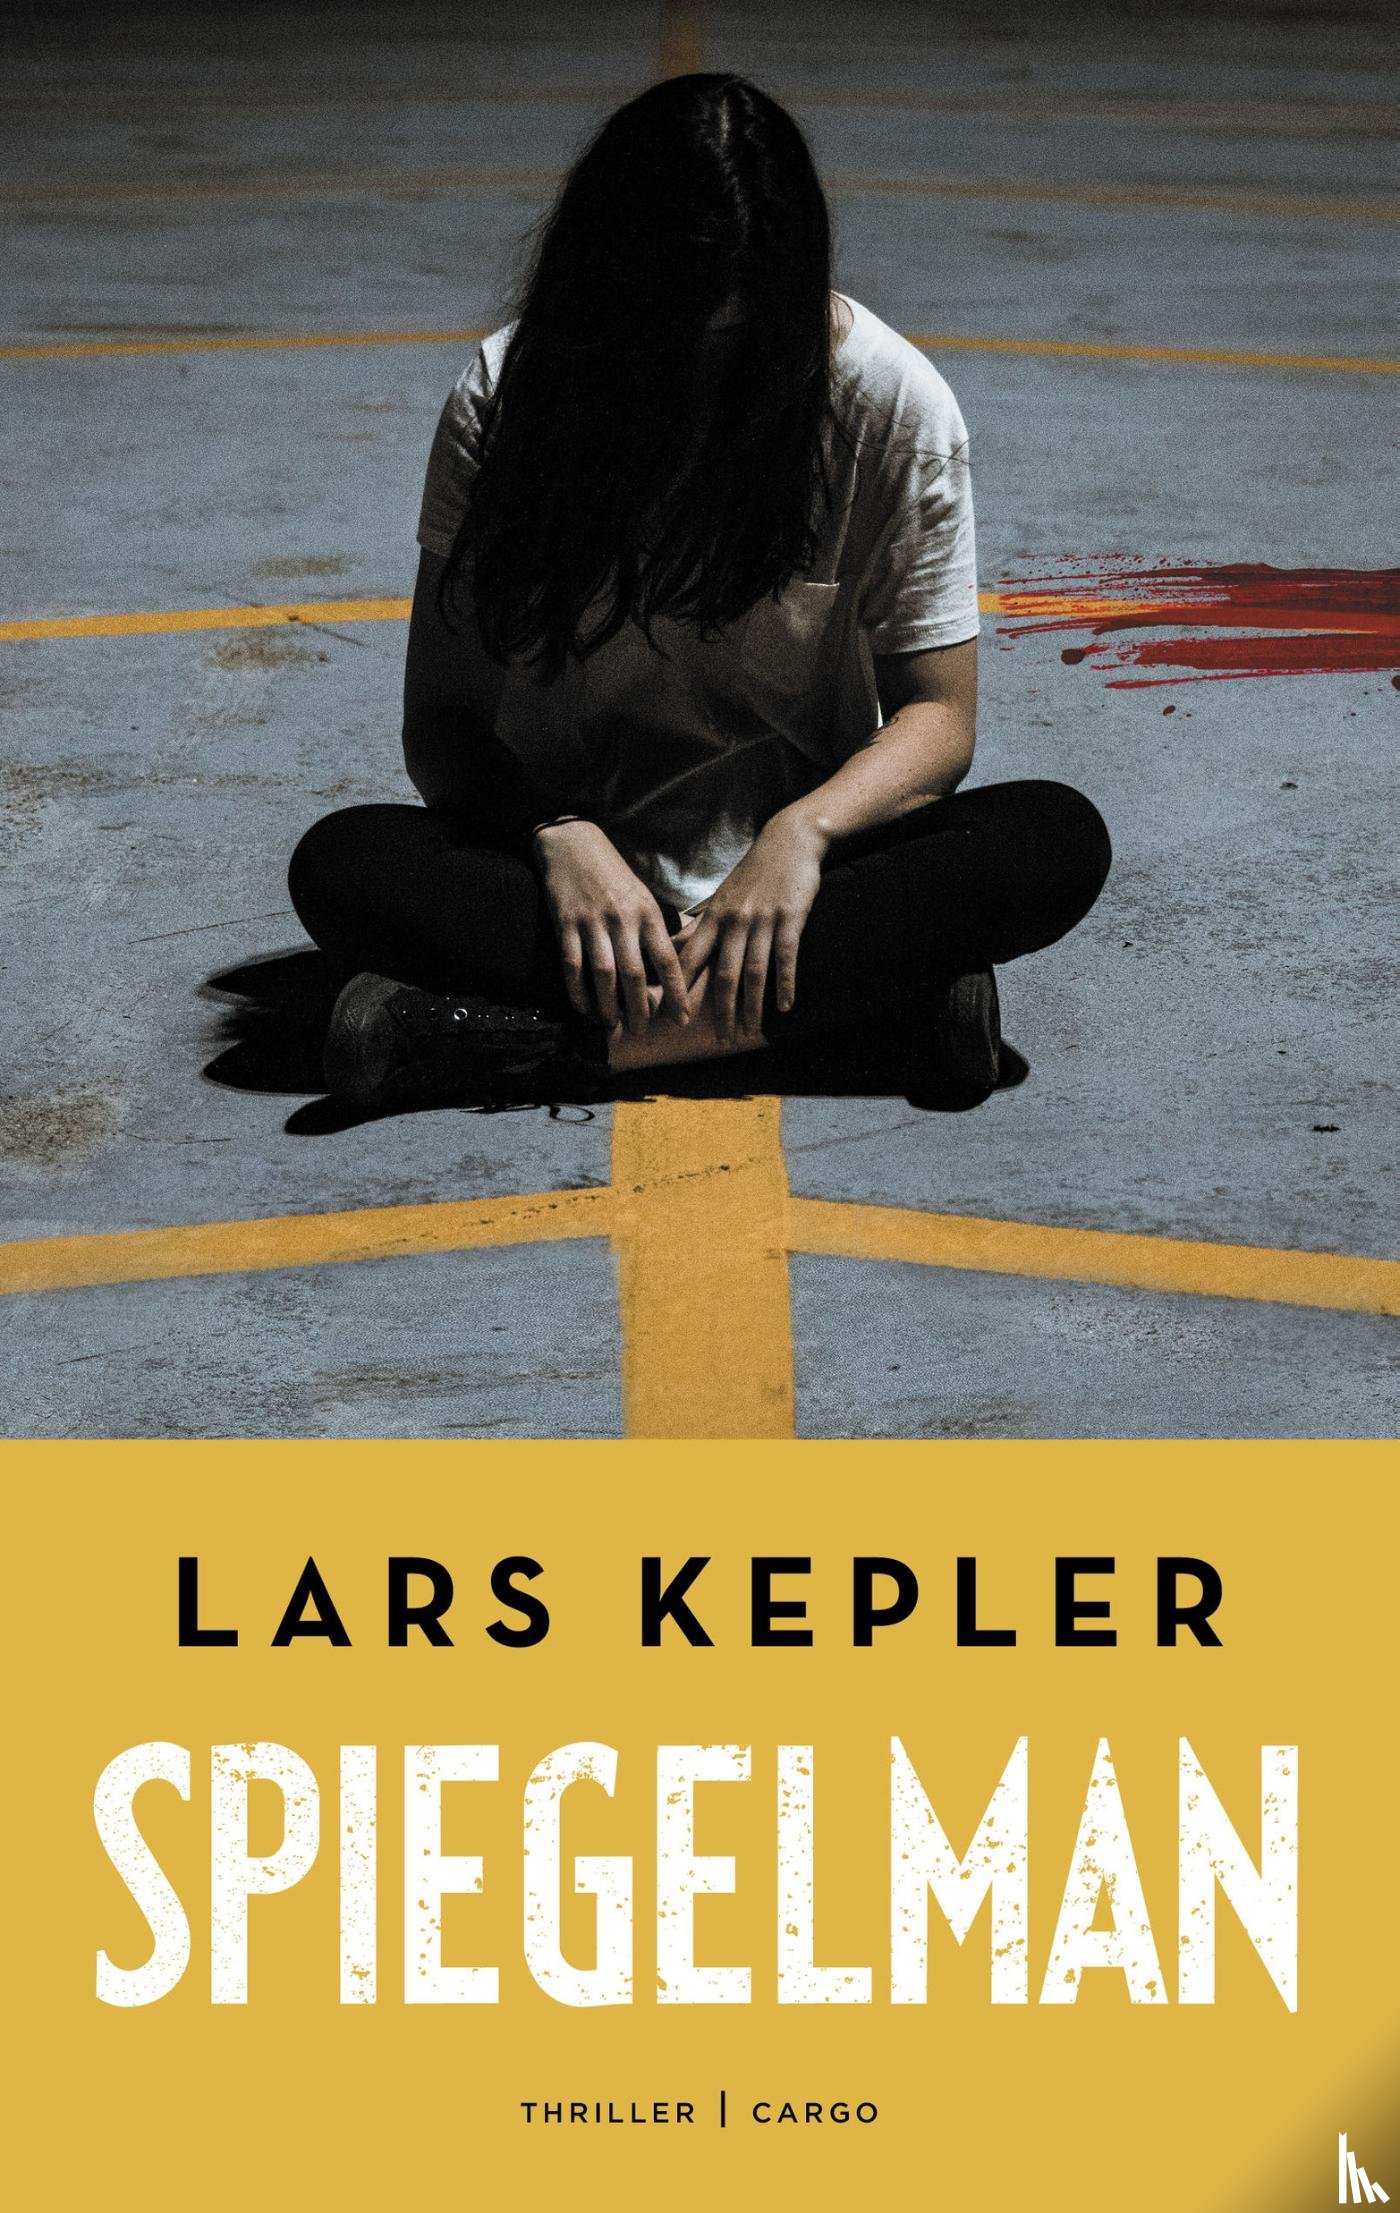 Kepler, Lars - Spiegelman